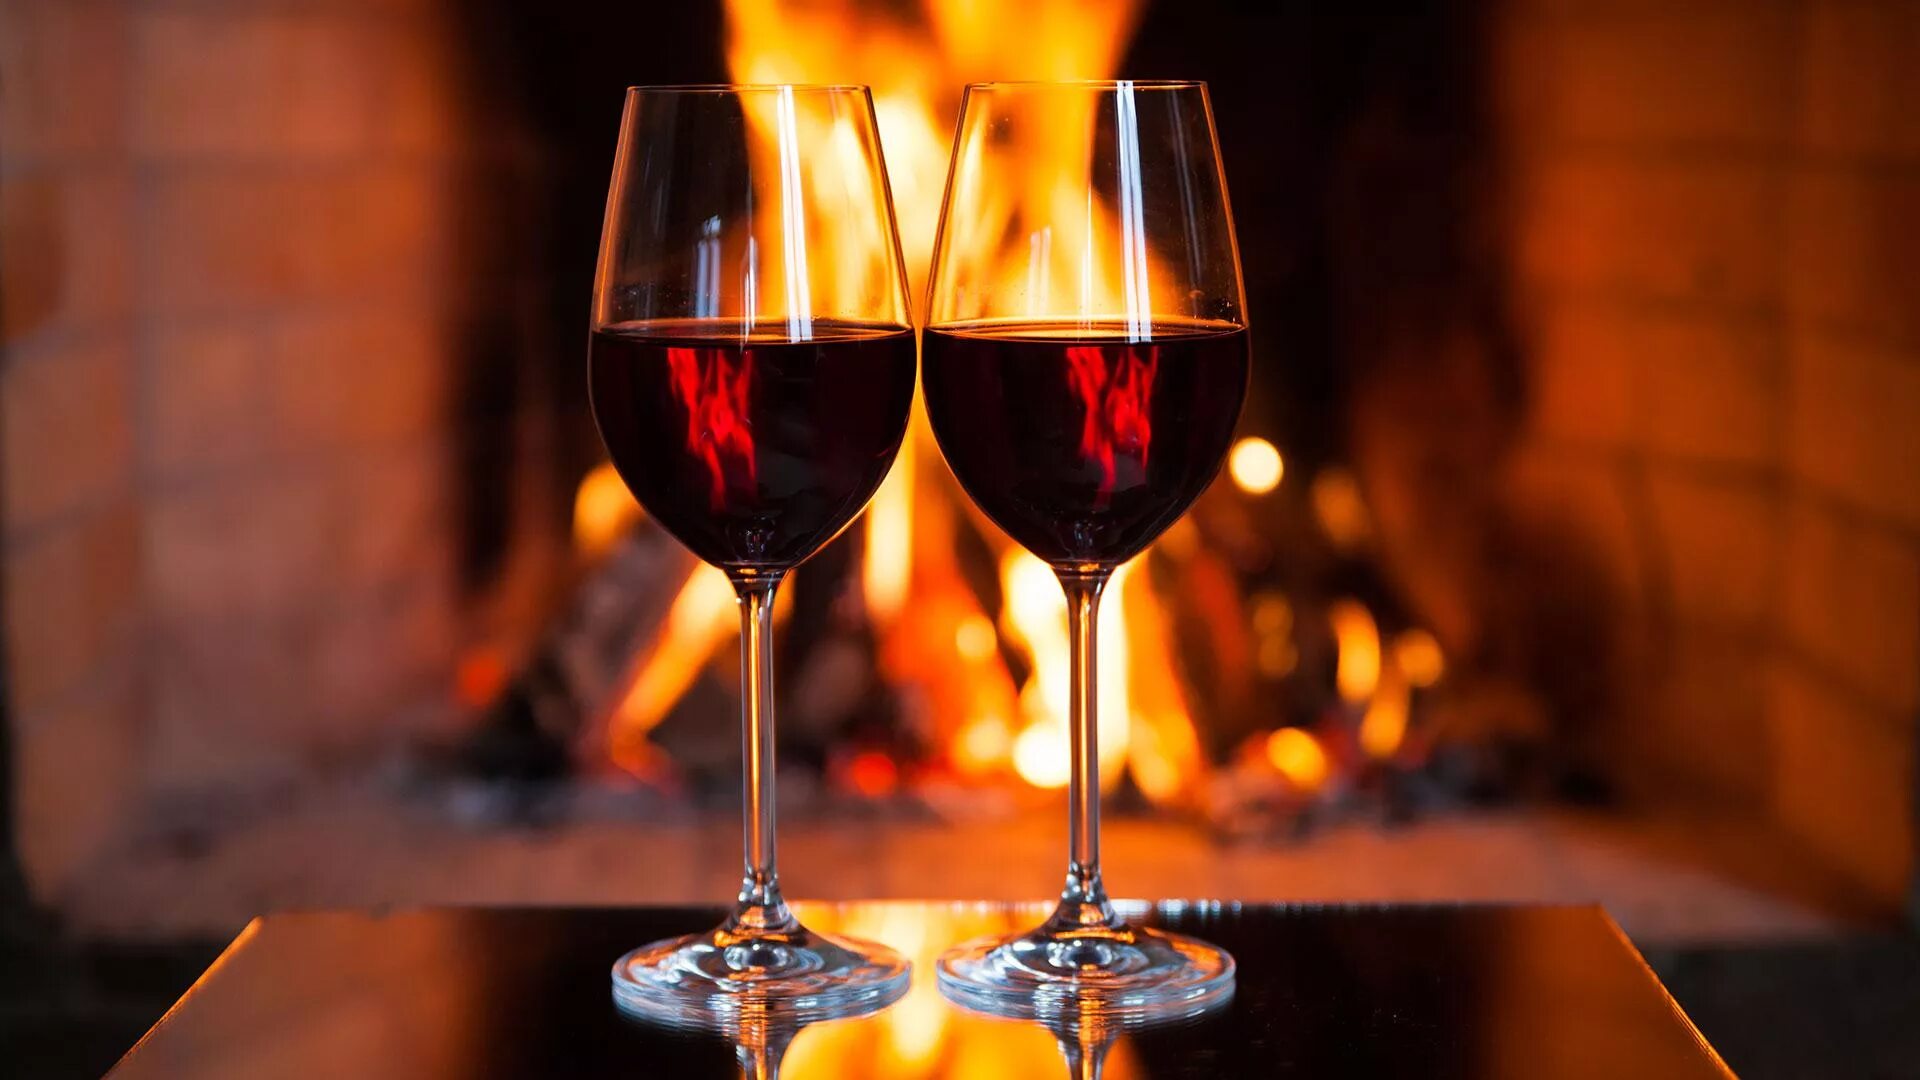 Бокал вина. Камин и два бокала вина. Романтический вечер. Два бокала вина и свечи. Бокал вина огонь